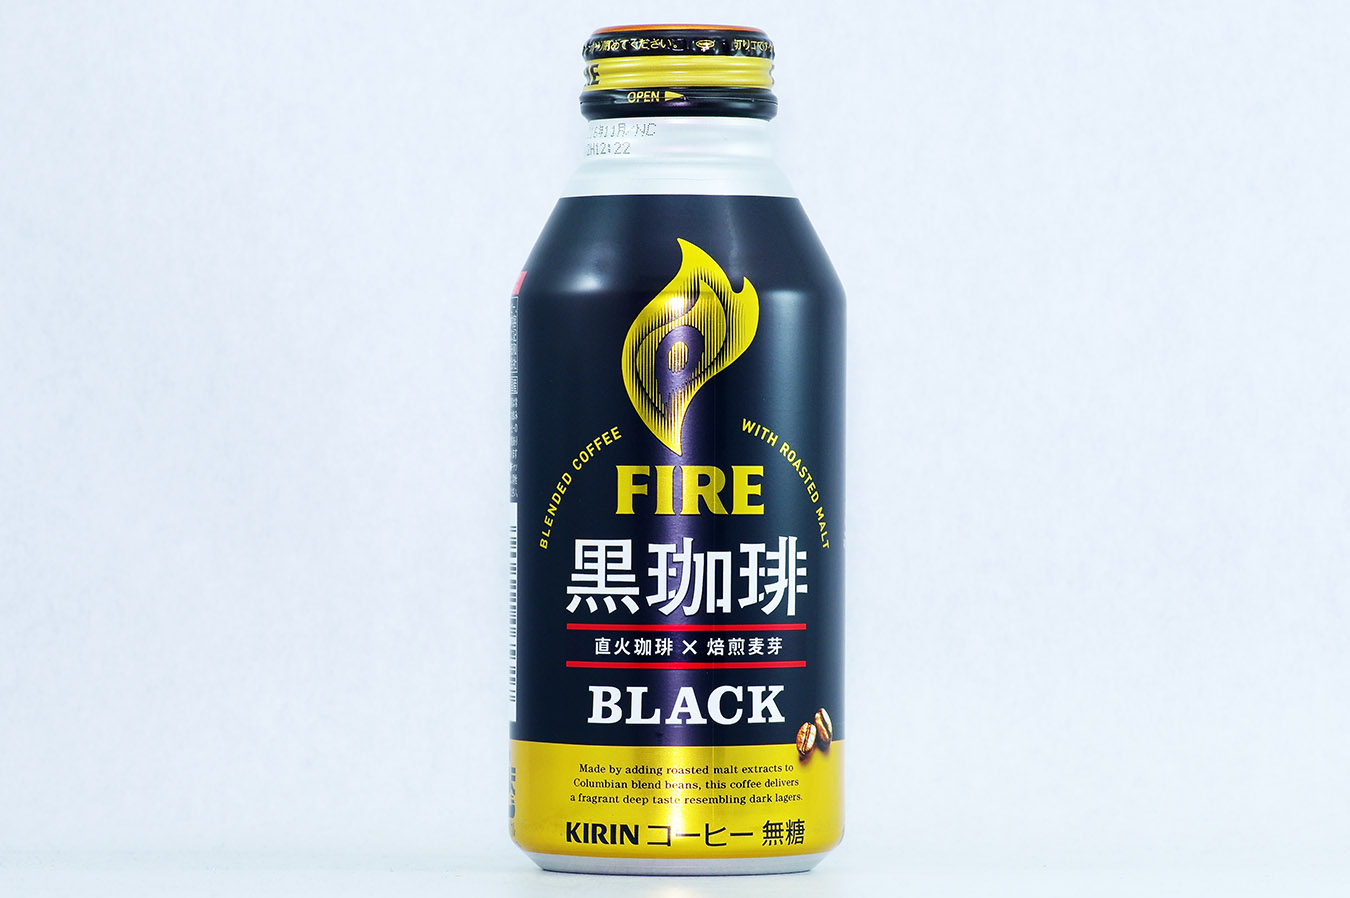 FIRE 黒珈琲ブラック 2016年2月